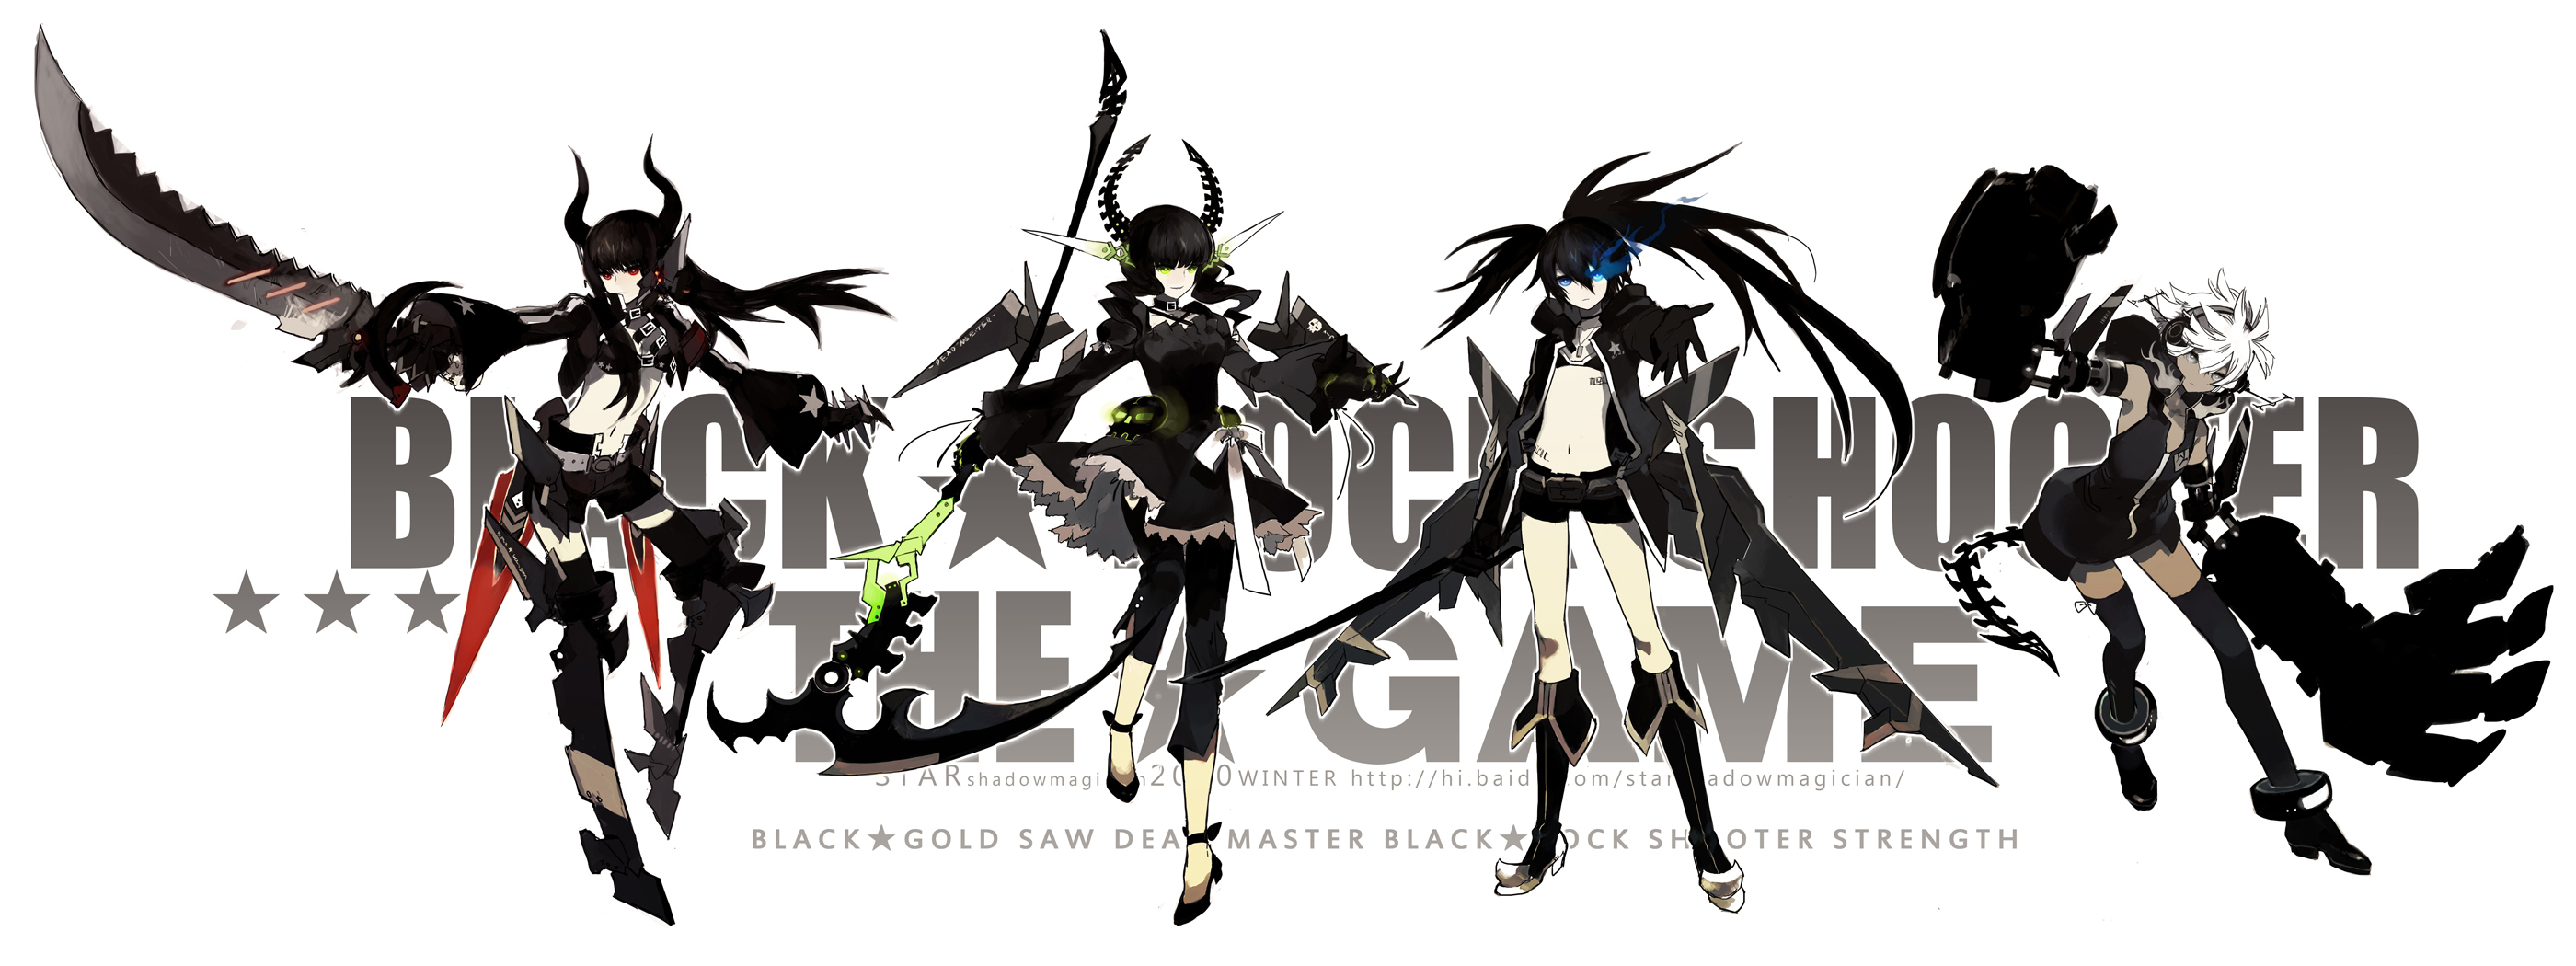 anime, black rock shooter, black gold saw, dead master (black rock shooter), strength (black rock shooter) High Definition image